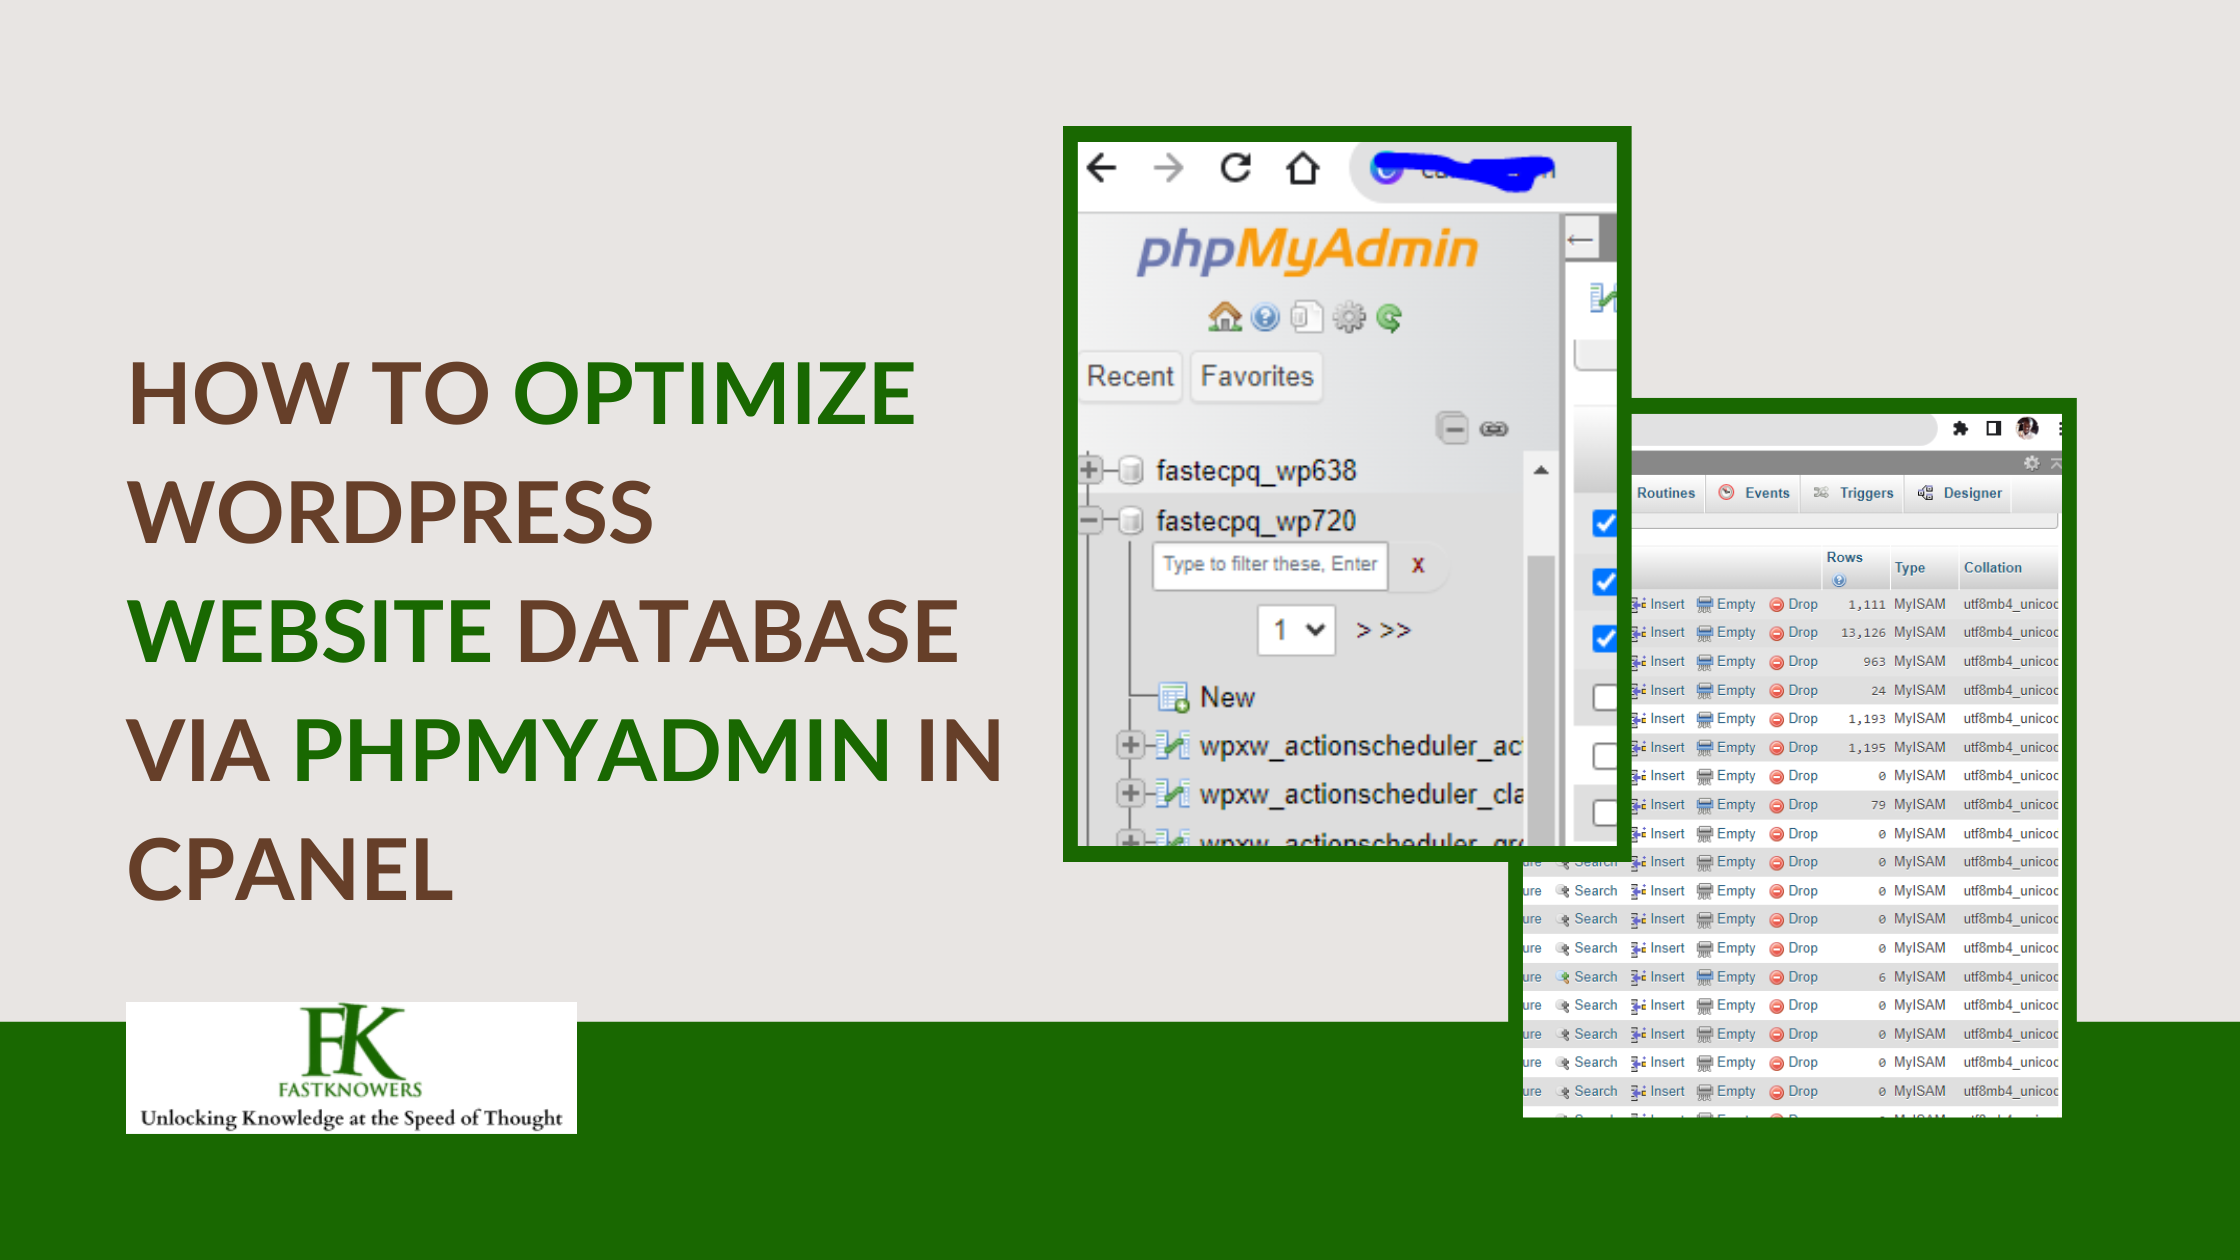 How to optimize WordPress website database via cPanel phpMyAdmin